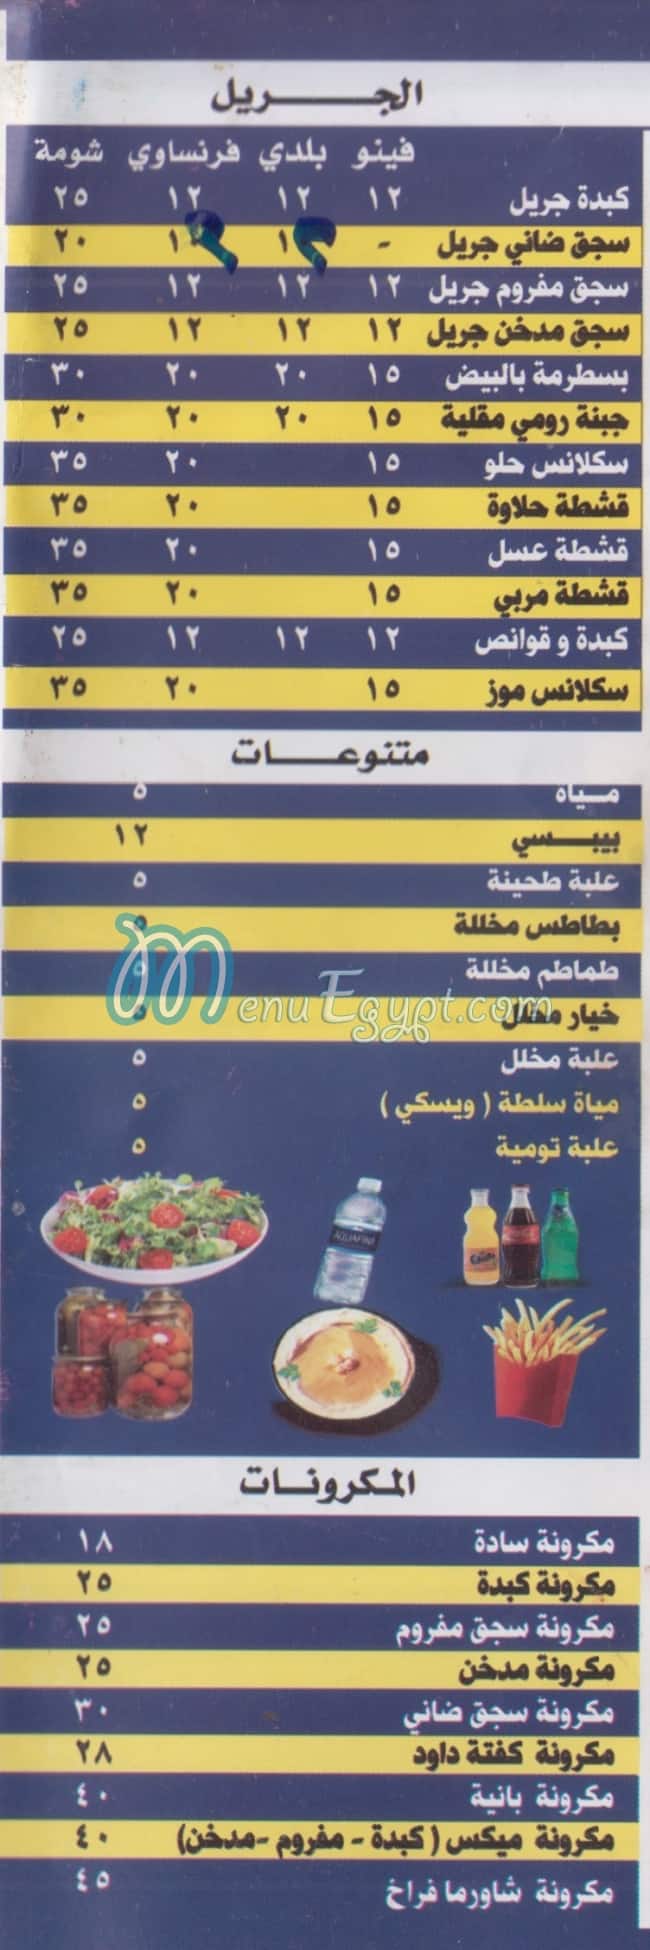 Loloaat El 3asher menu Egypt